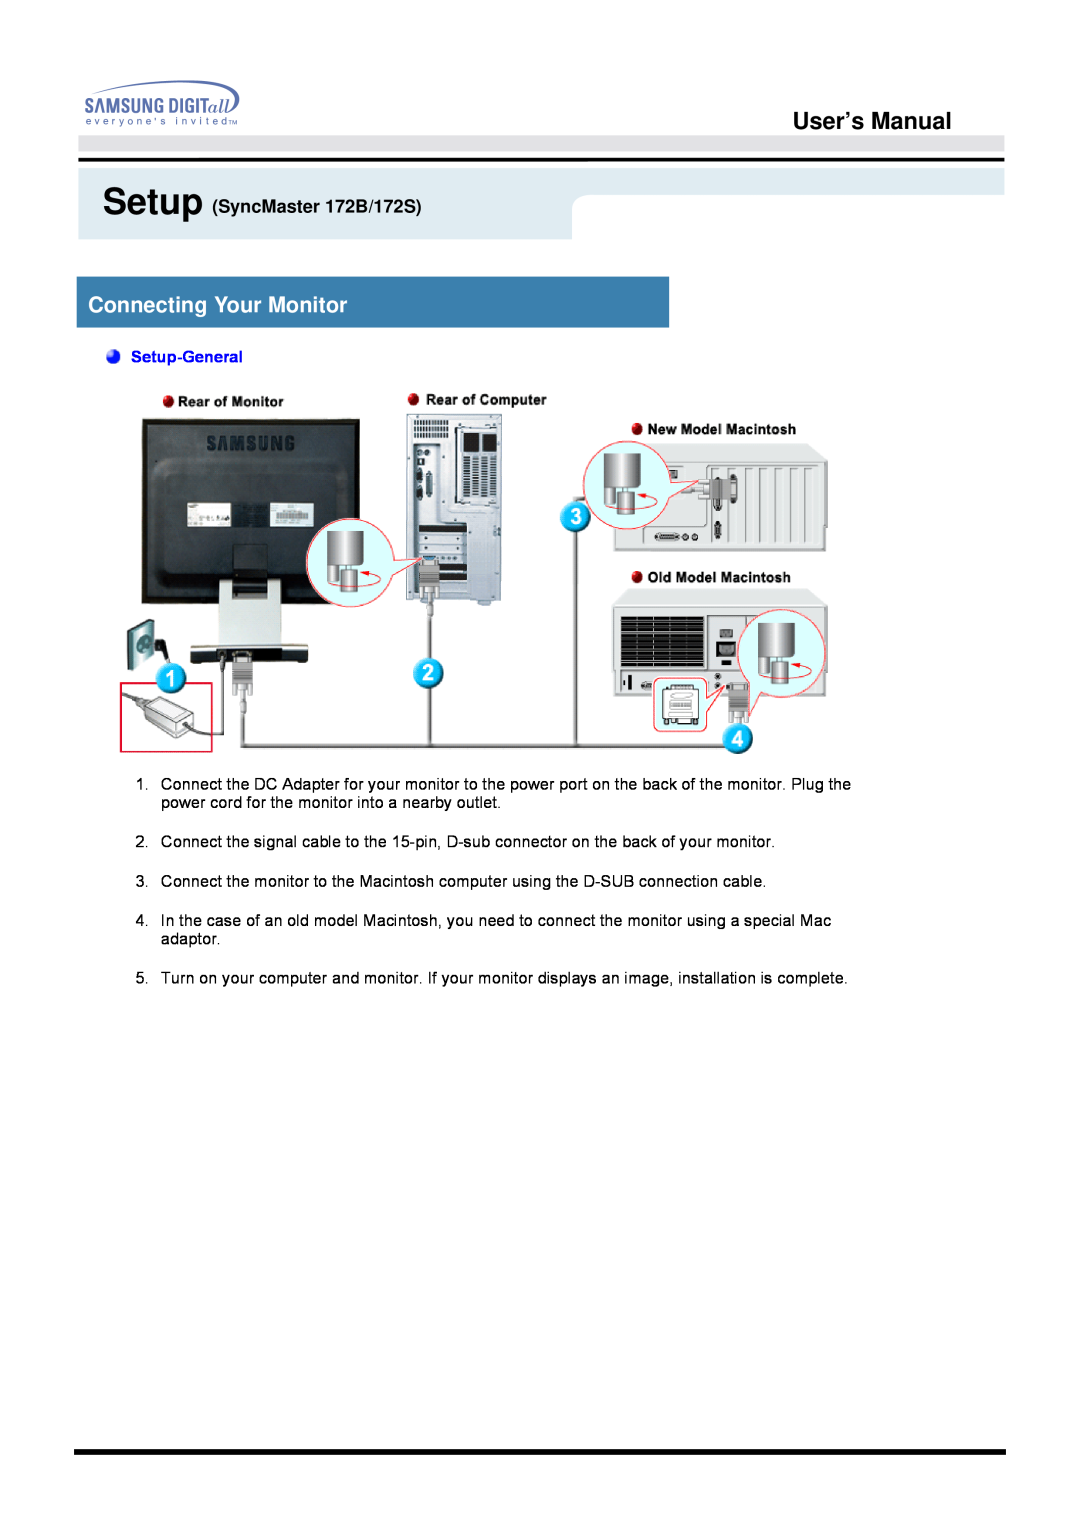 Samsung manual Connecting Your Monitor, User’s Manual, Setup SyncMaster 172B/172S, Setup-General 